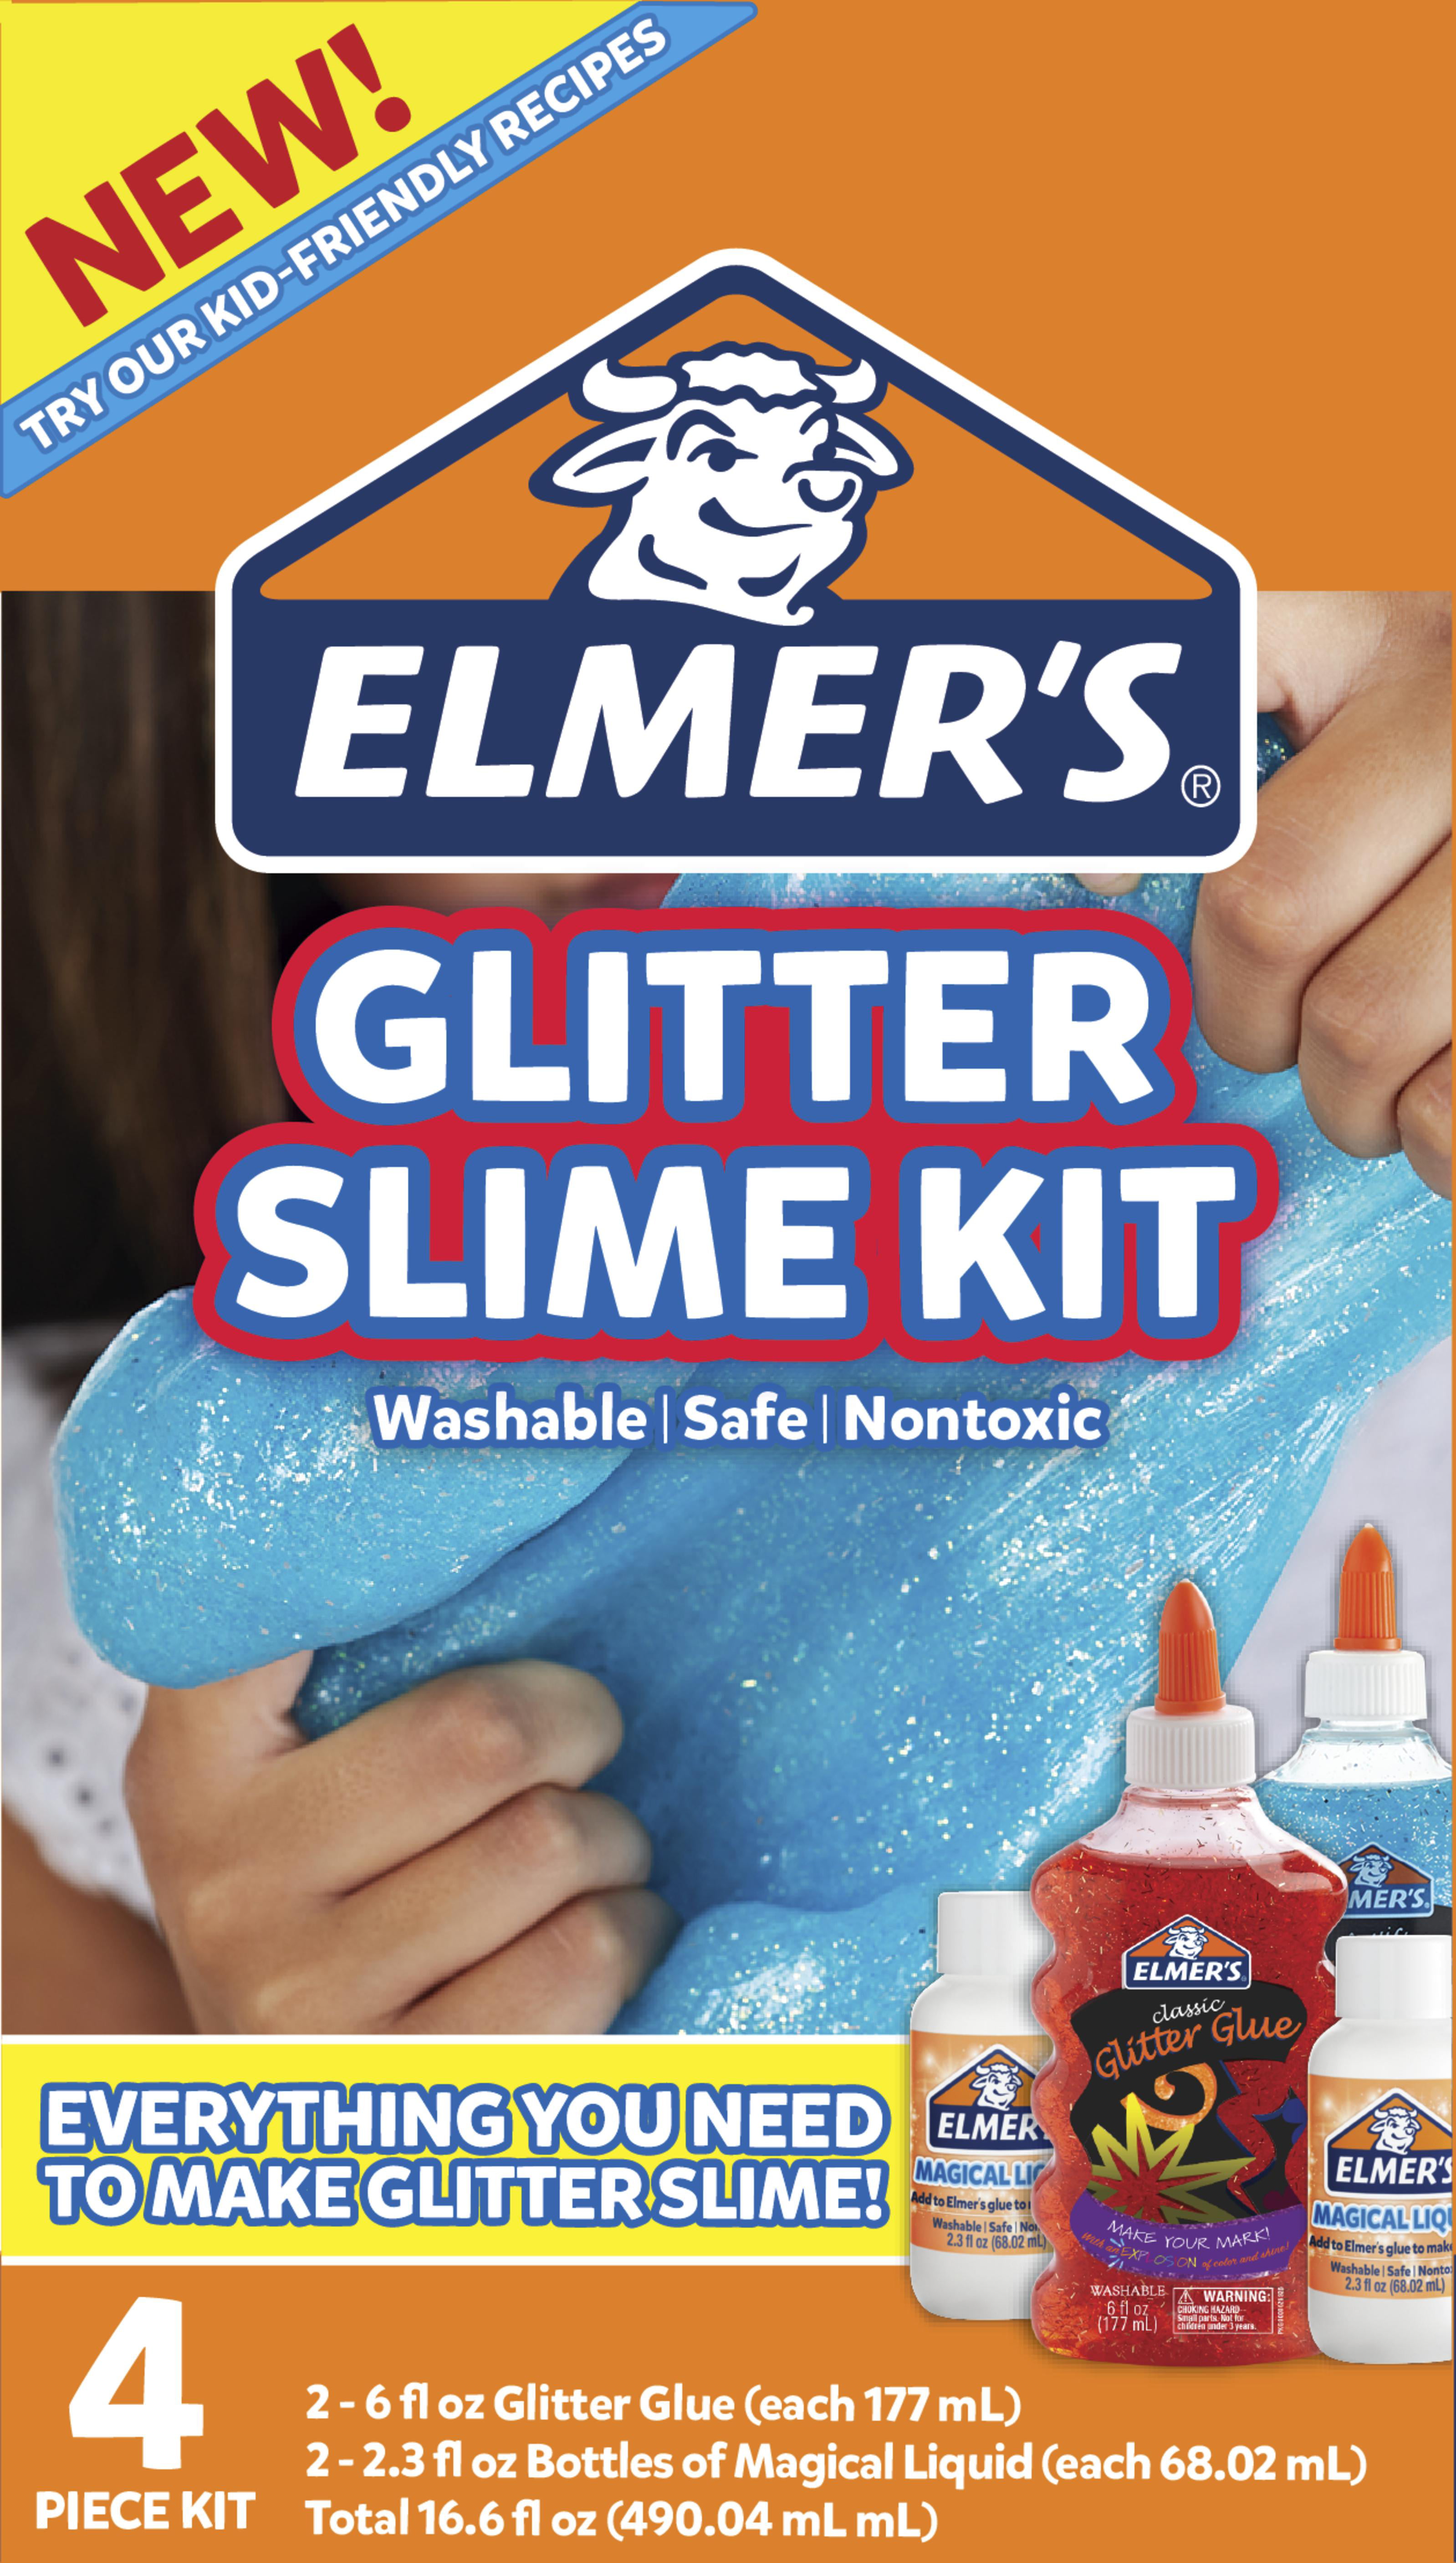 Elmers Glitter Slime Kit Gift For Kids Includes Magical Liquid Glitter Glue Walmartcom